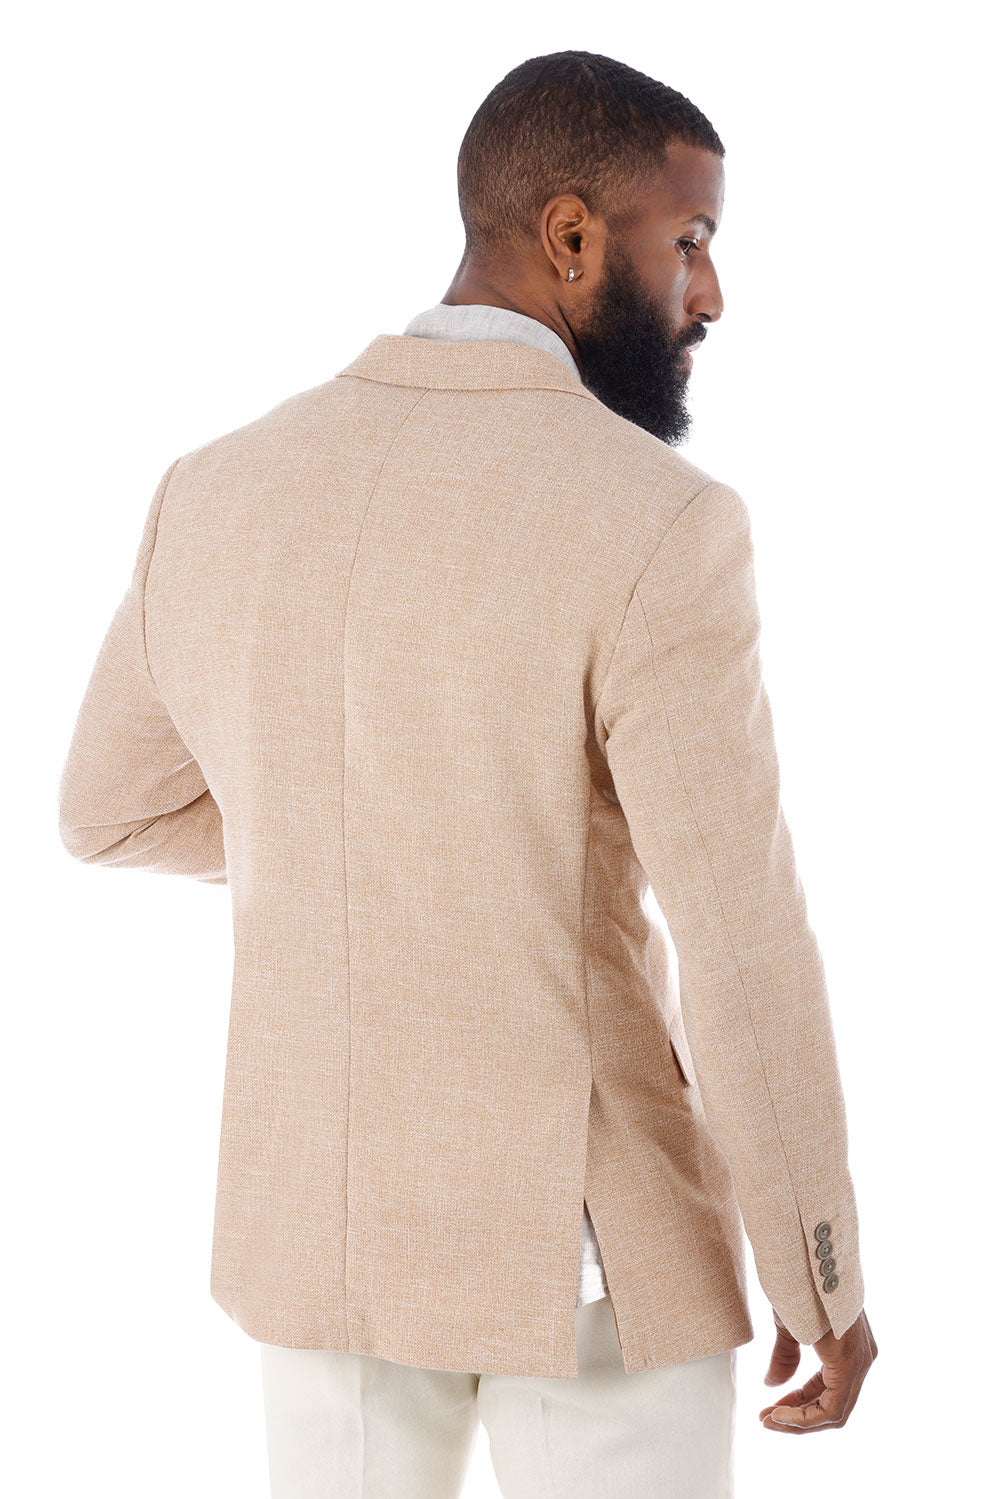 Barabas Men's Classic Tweed Pattern Notch Lapel Blazer 4BL30 Sand